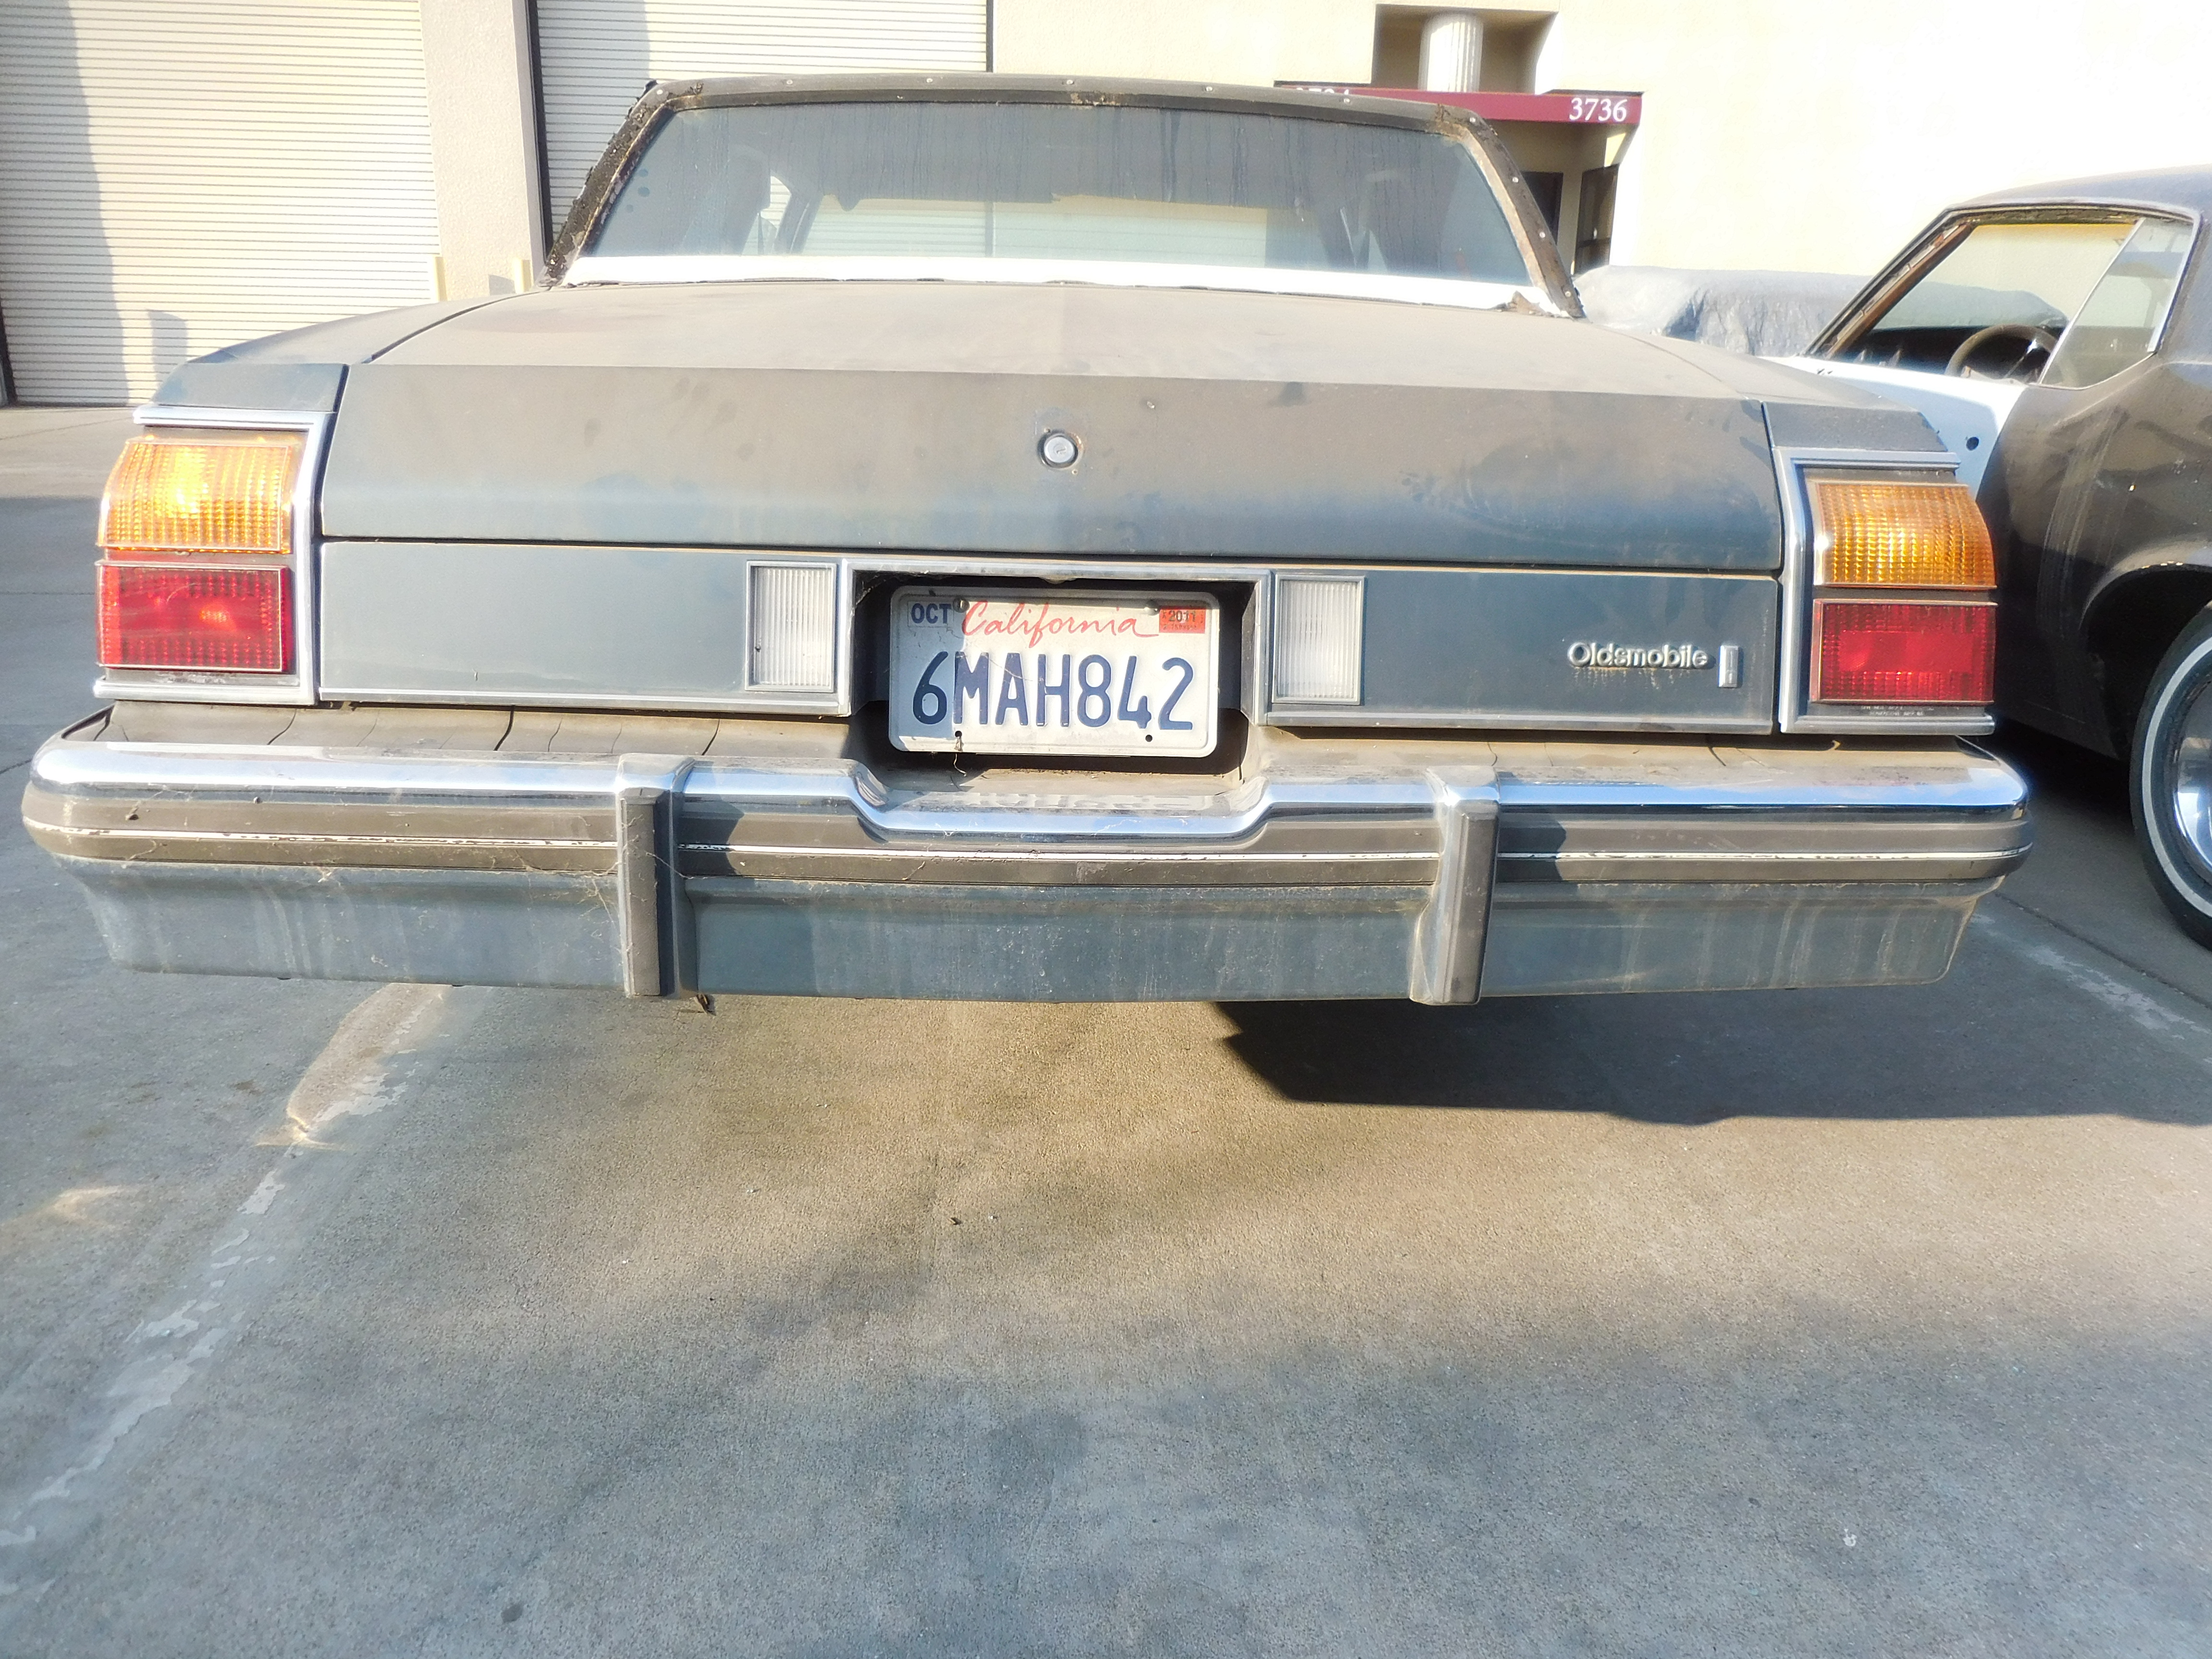 1984, oldsmobile,88, fender, door,bumper,front,rear,quarter,panel,fillers, header, panel,hood, glass,moldings,